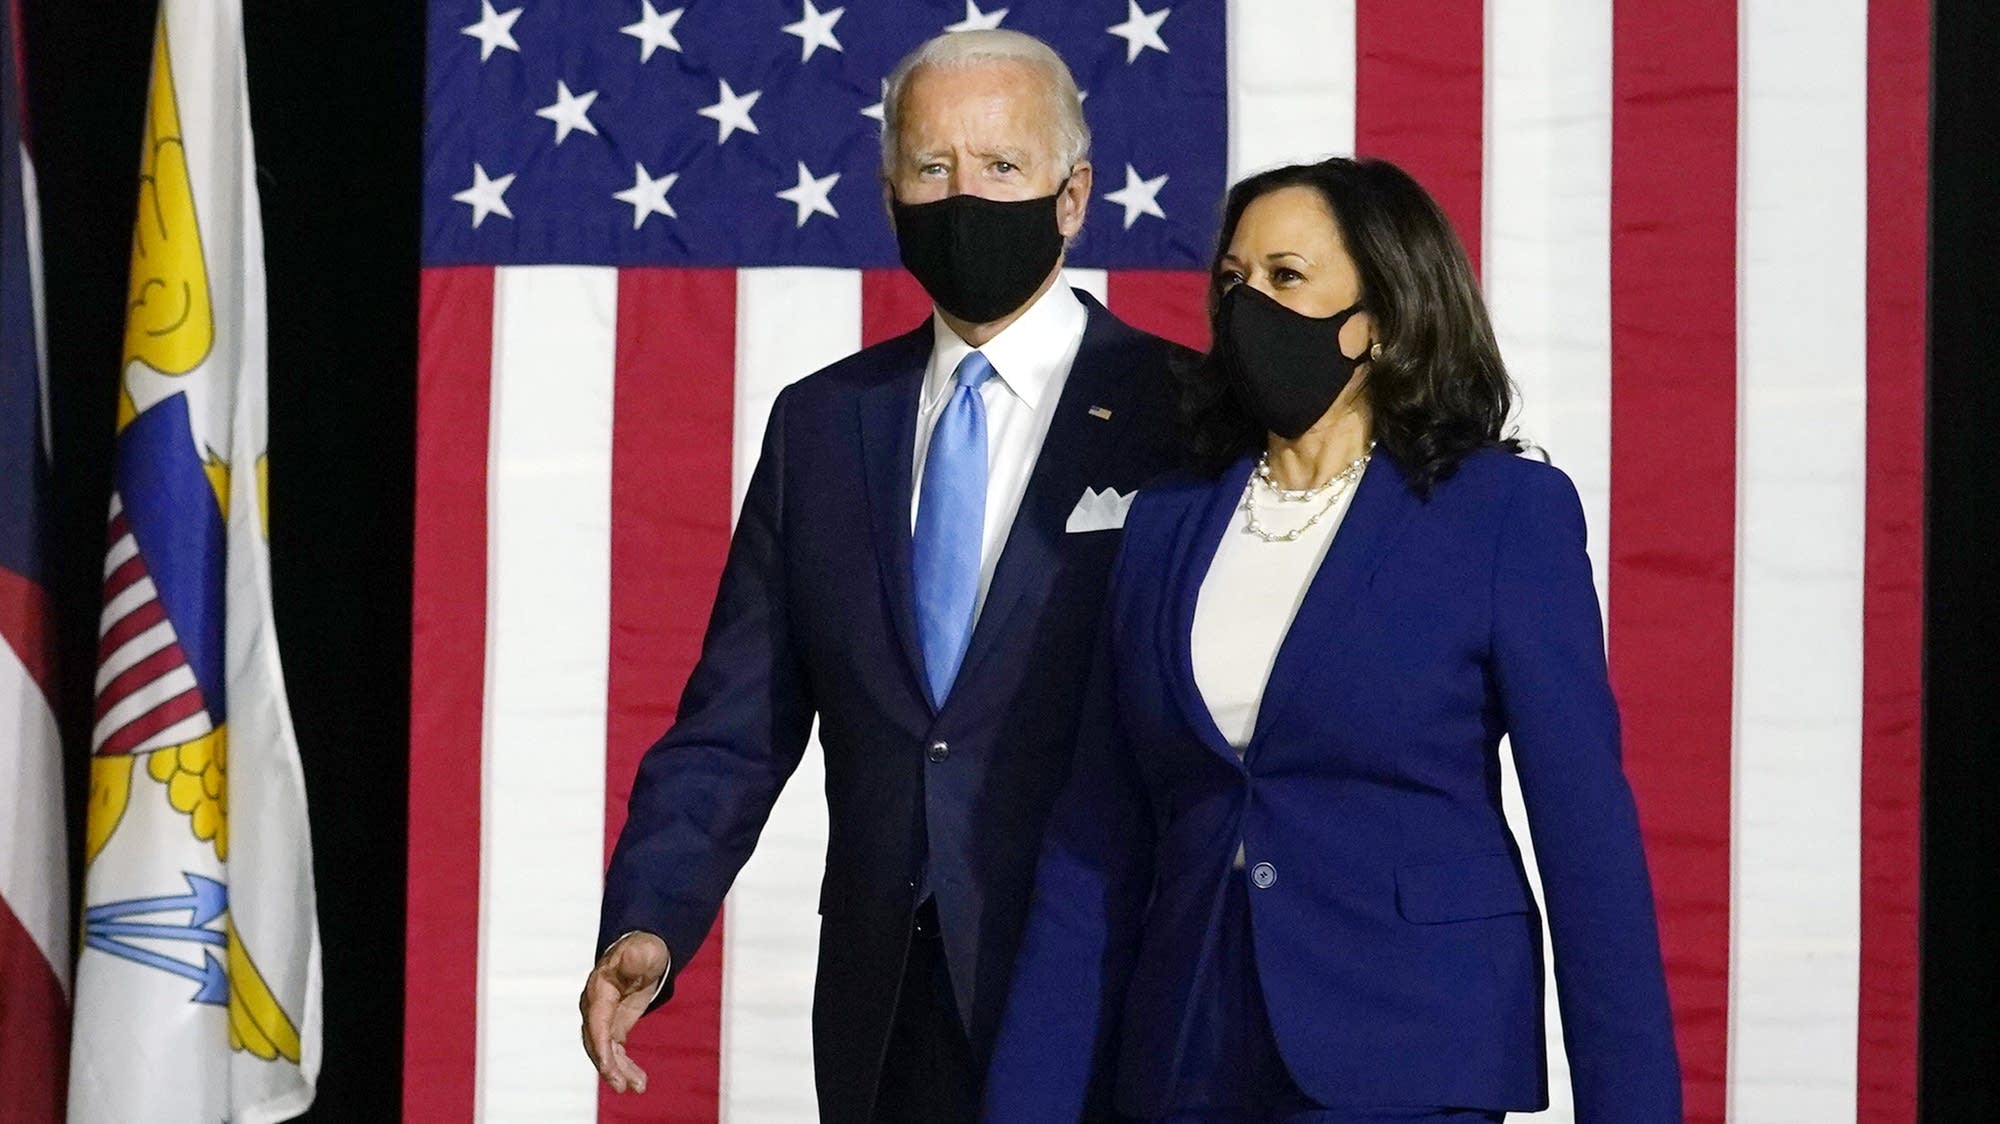 Joe Biden and Kamala Harris walking